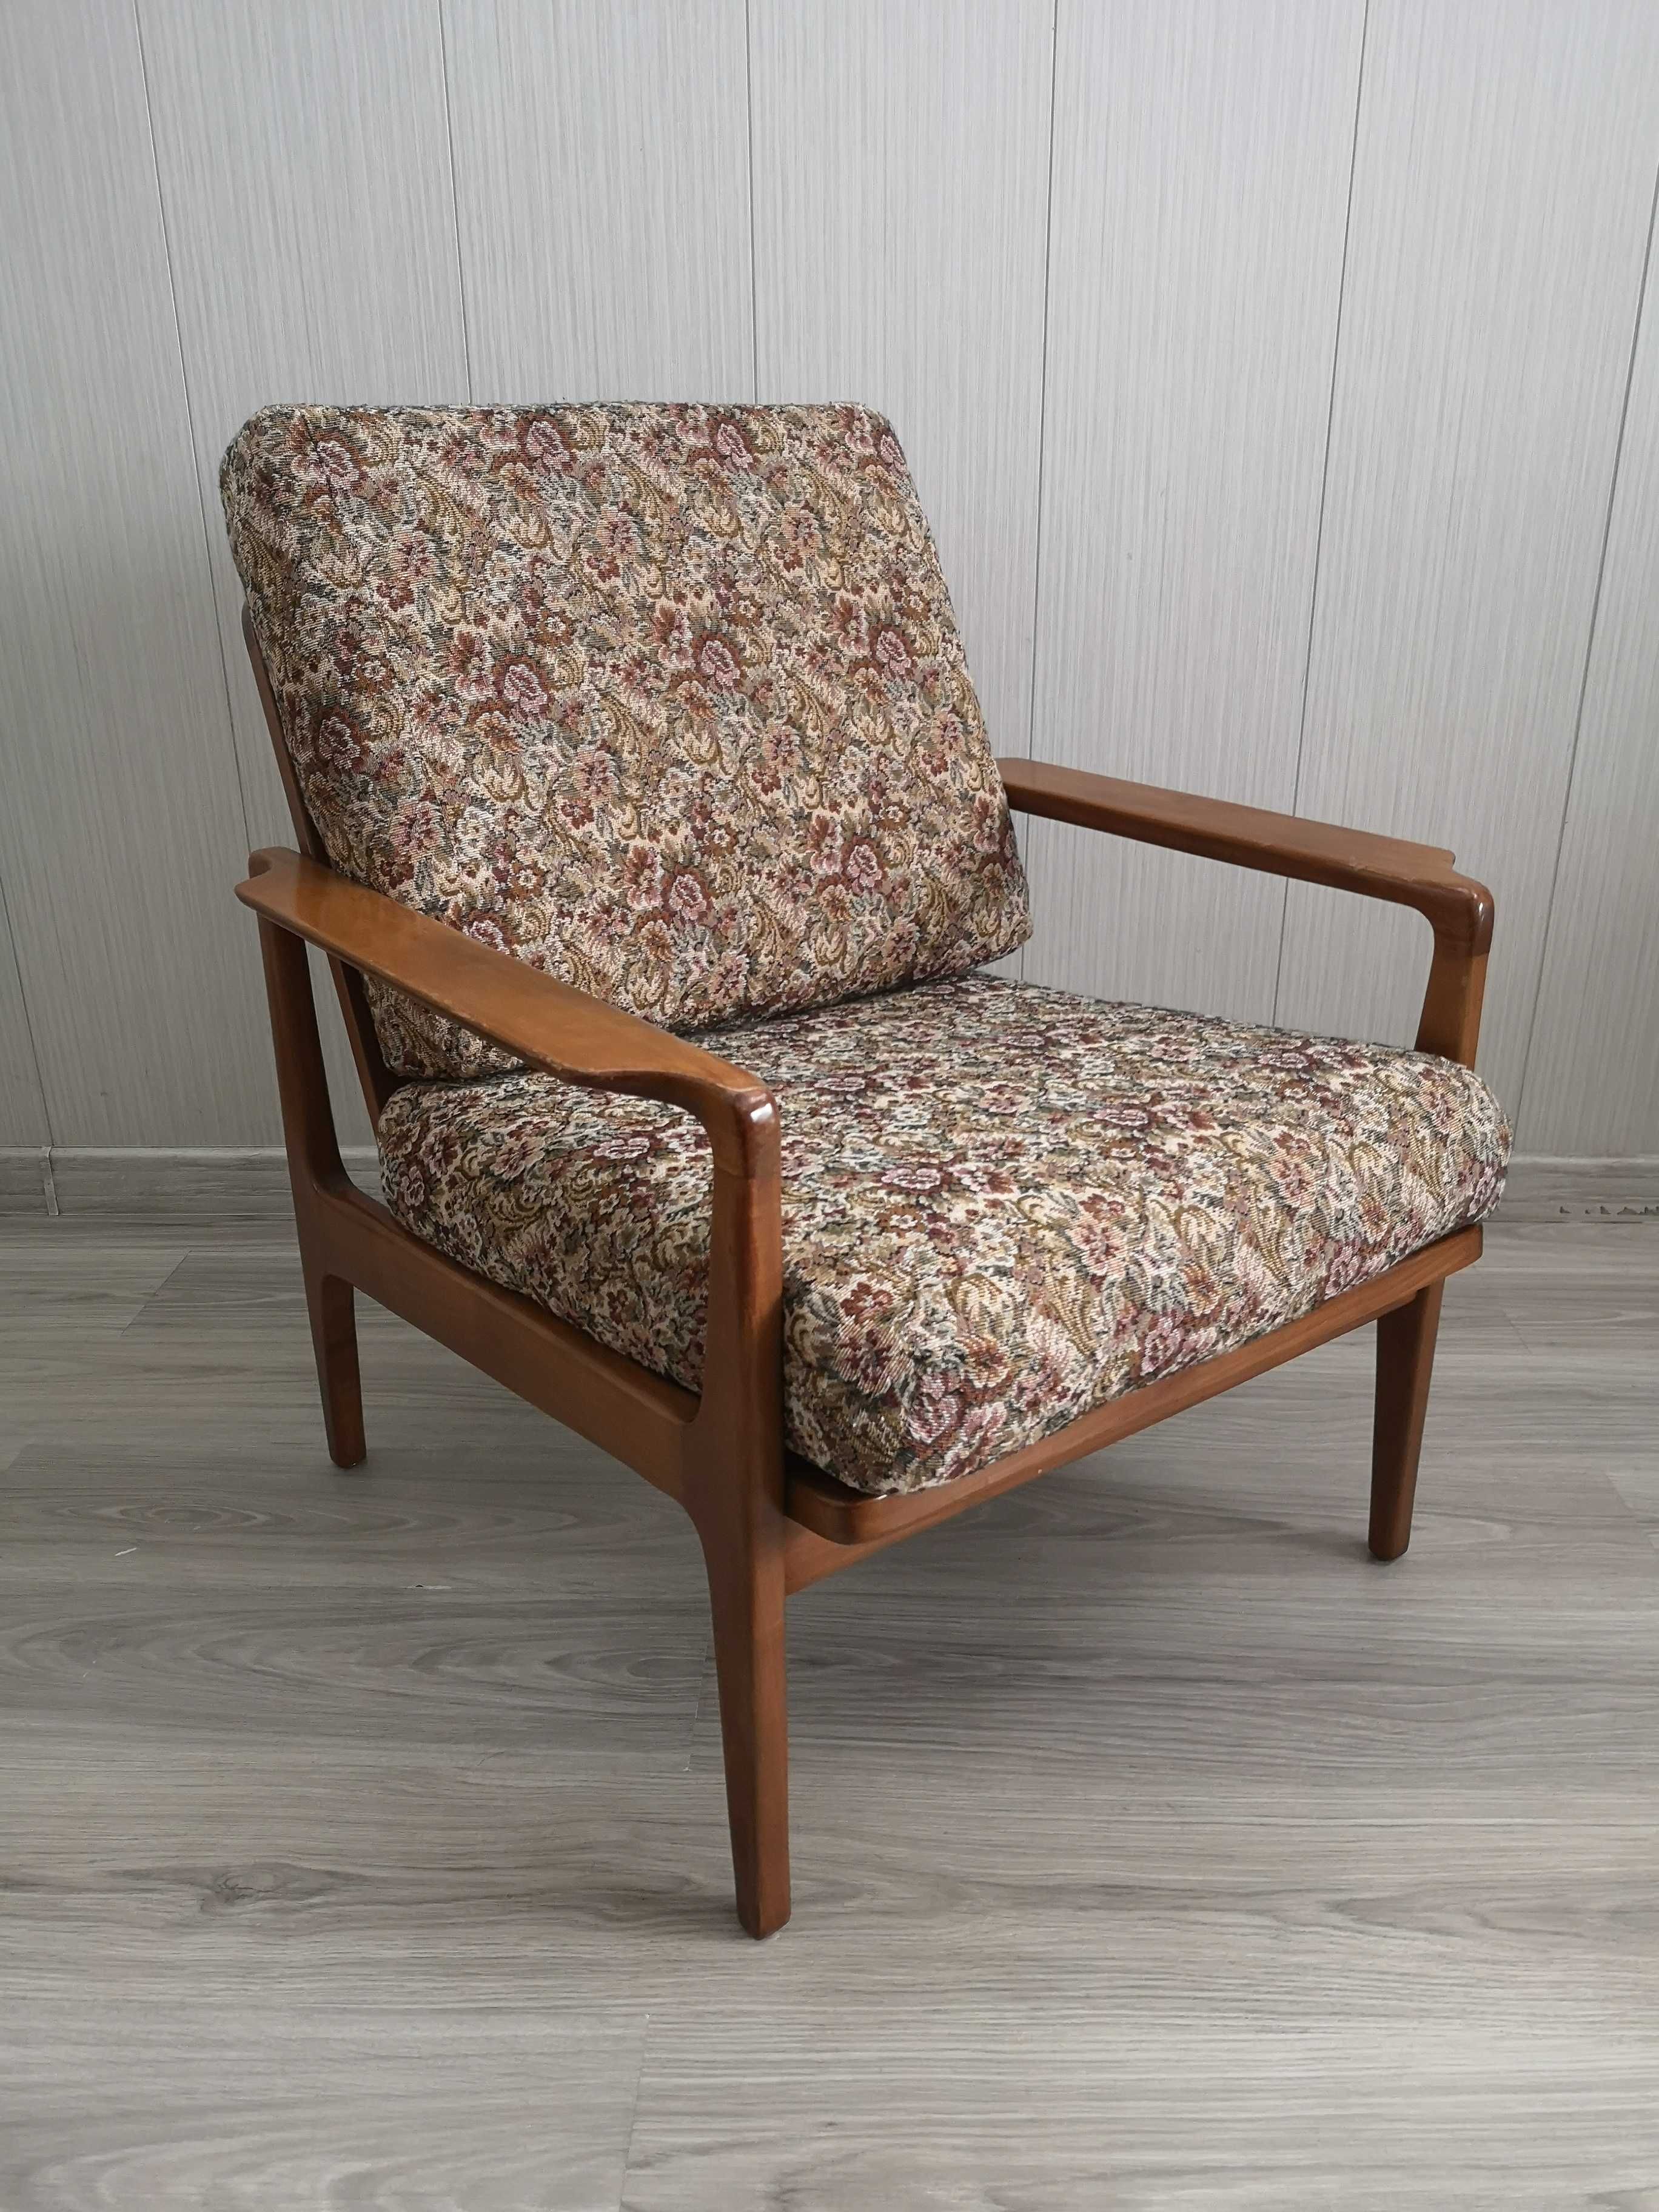 Fotel duński duńczyk odcienie brązu vintage retro lata 60 70